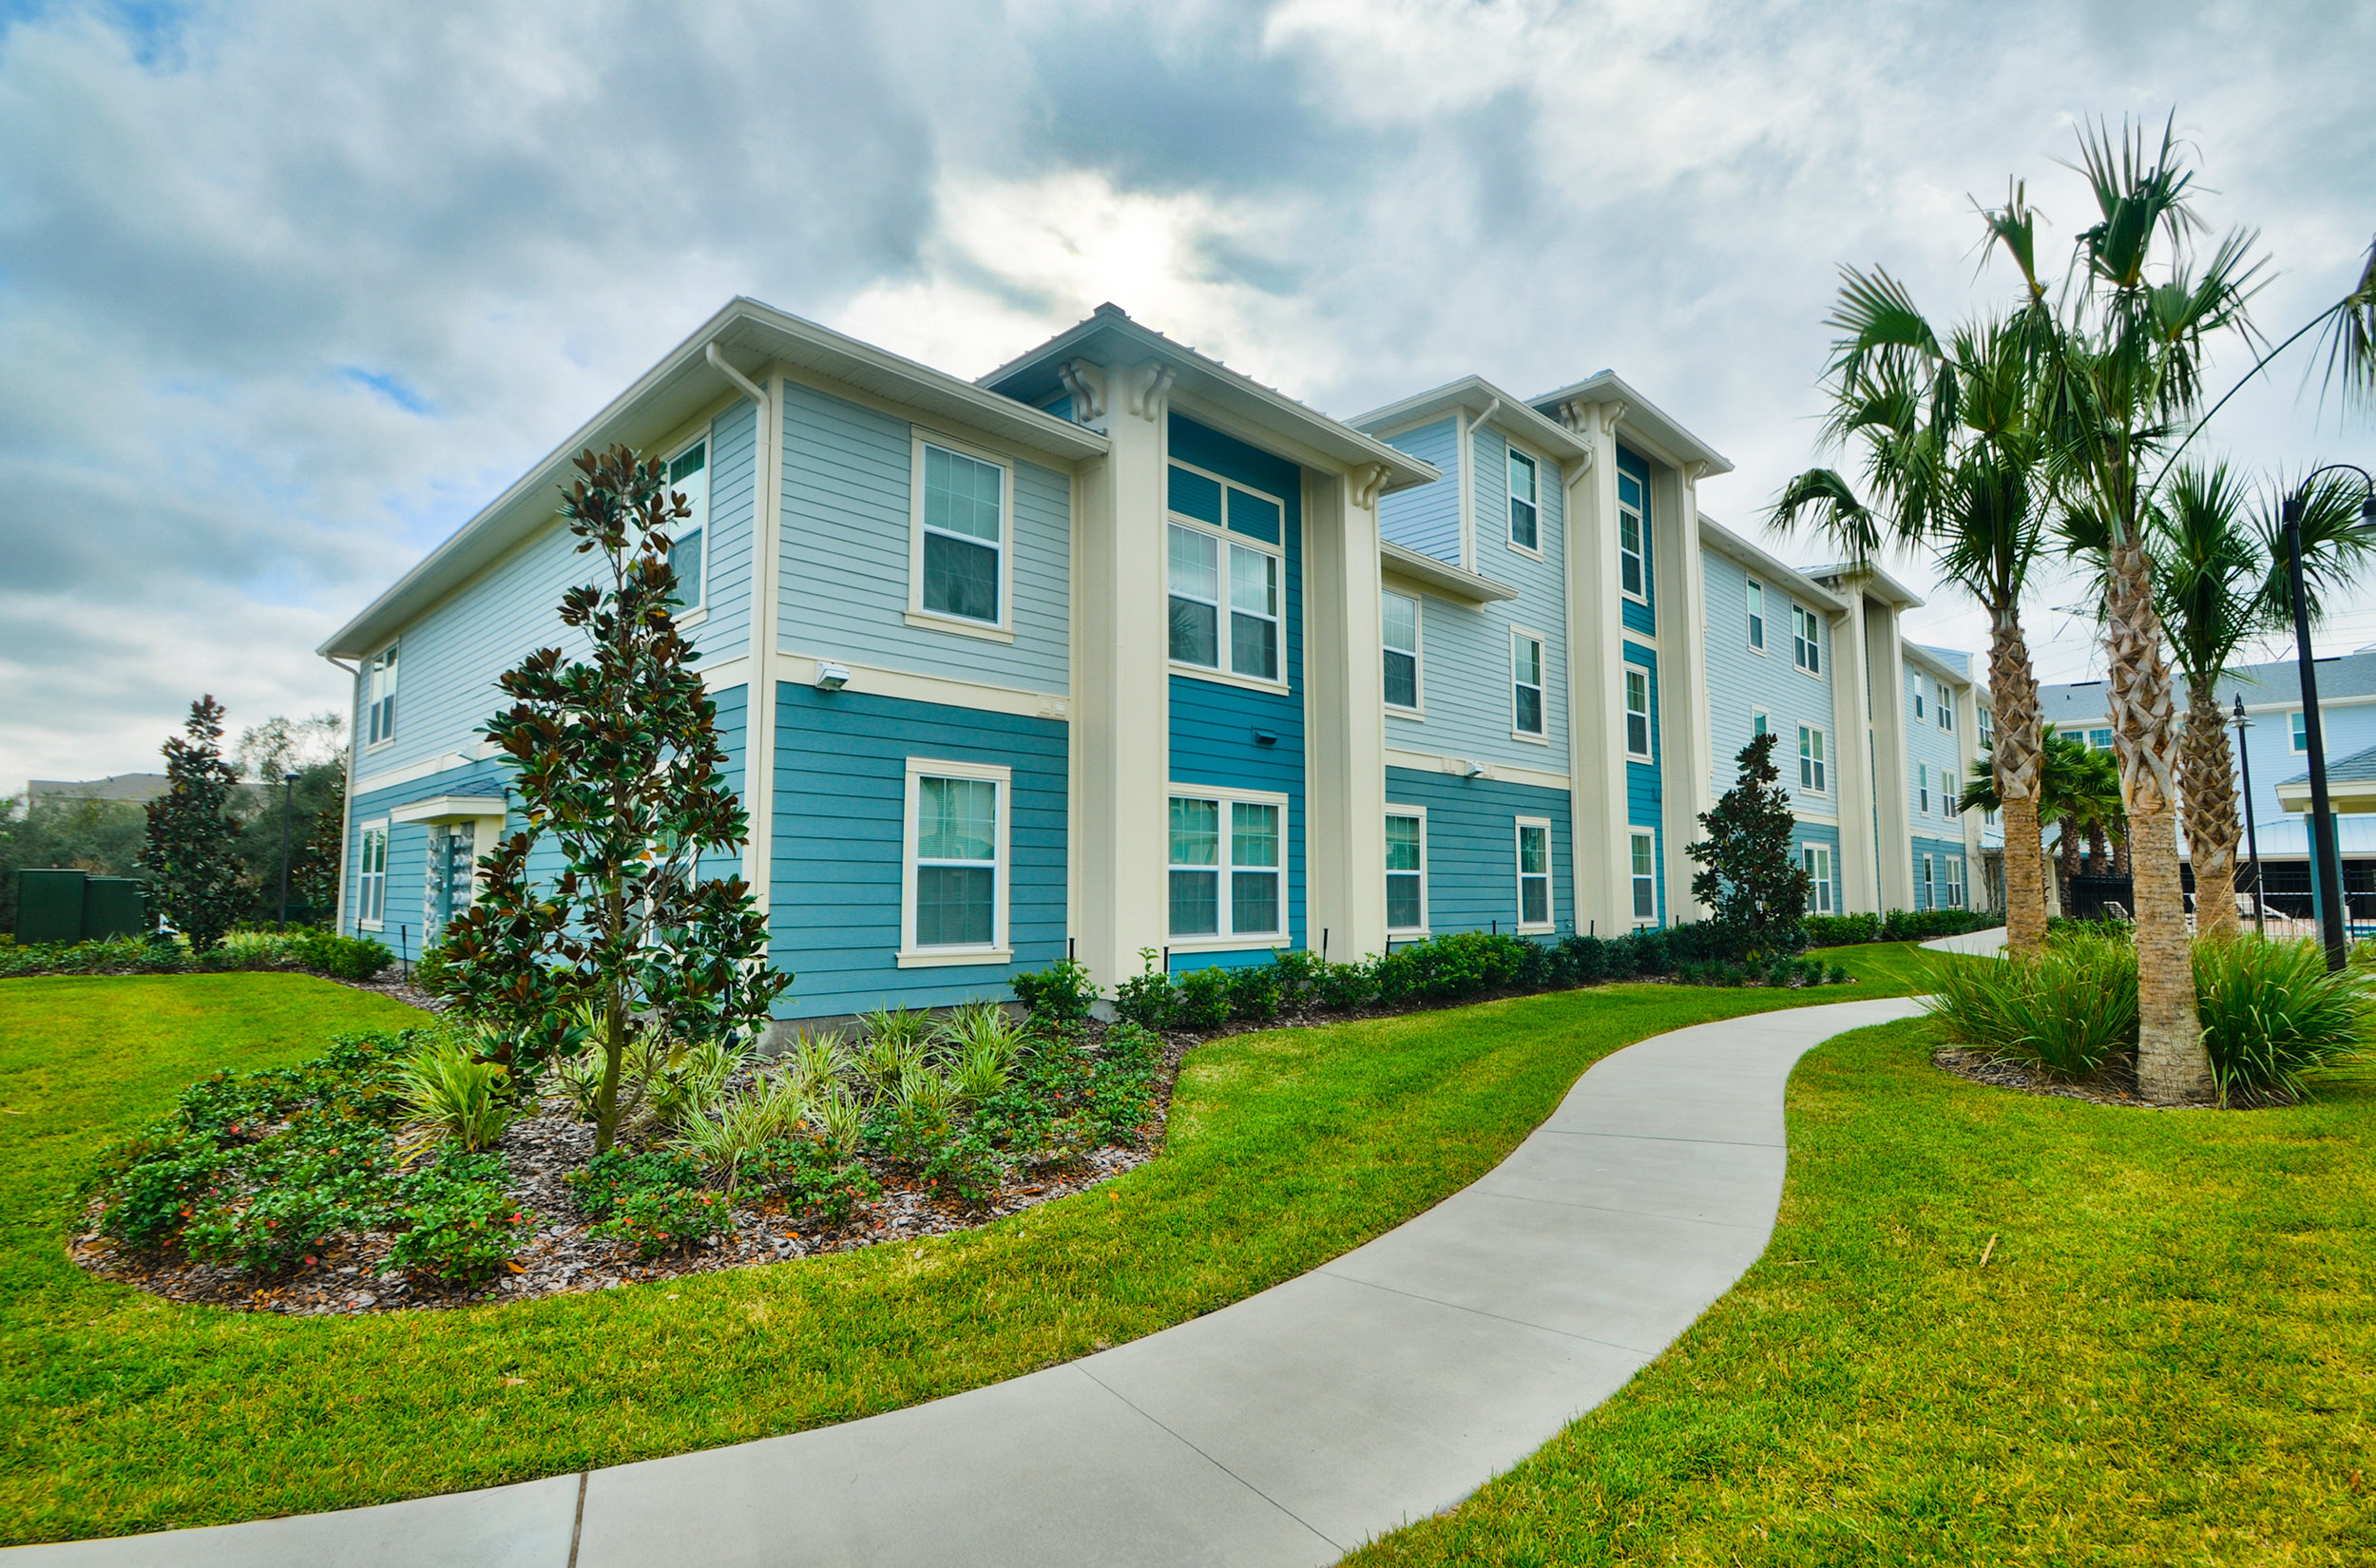 Senior living facility multi story complex